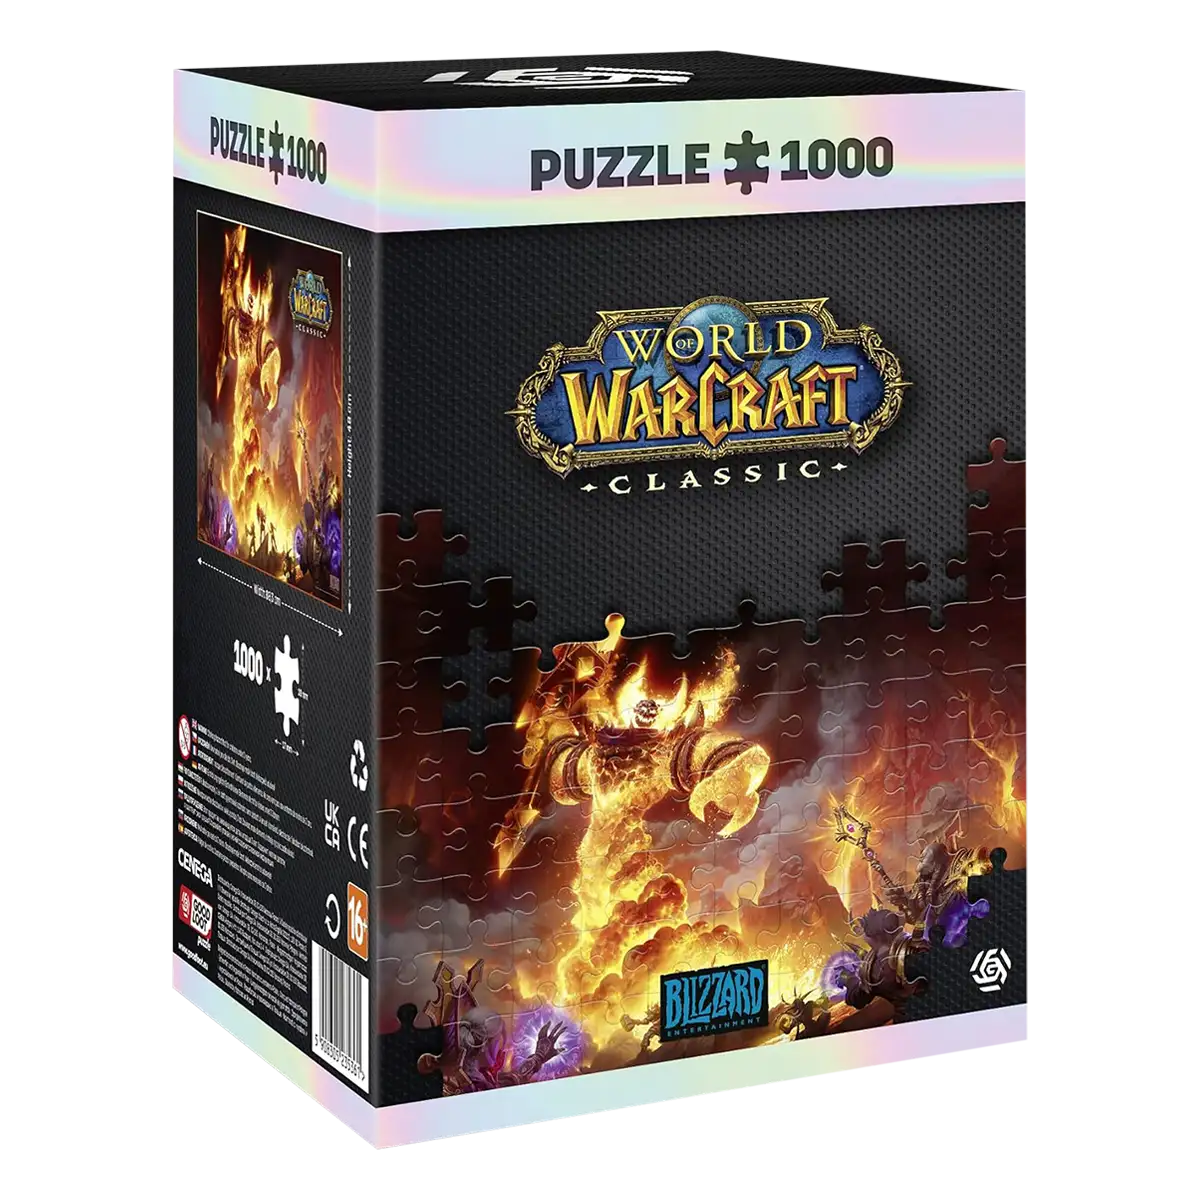 World of Warcraft: Classic Puzzle "Ragnaros" (1000 pcs)